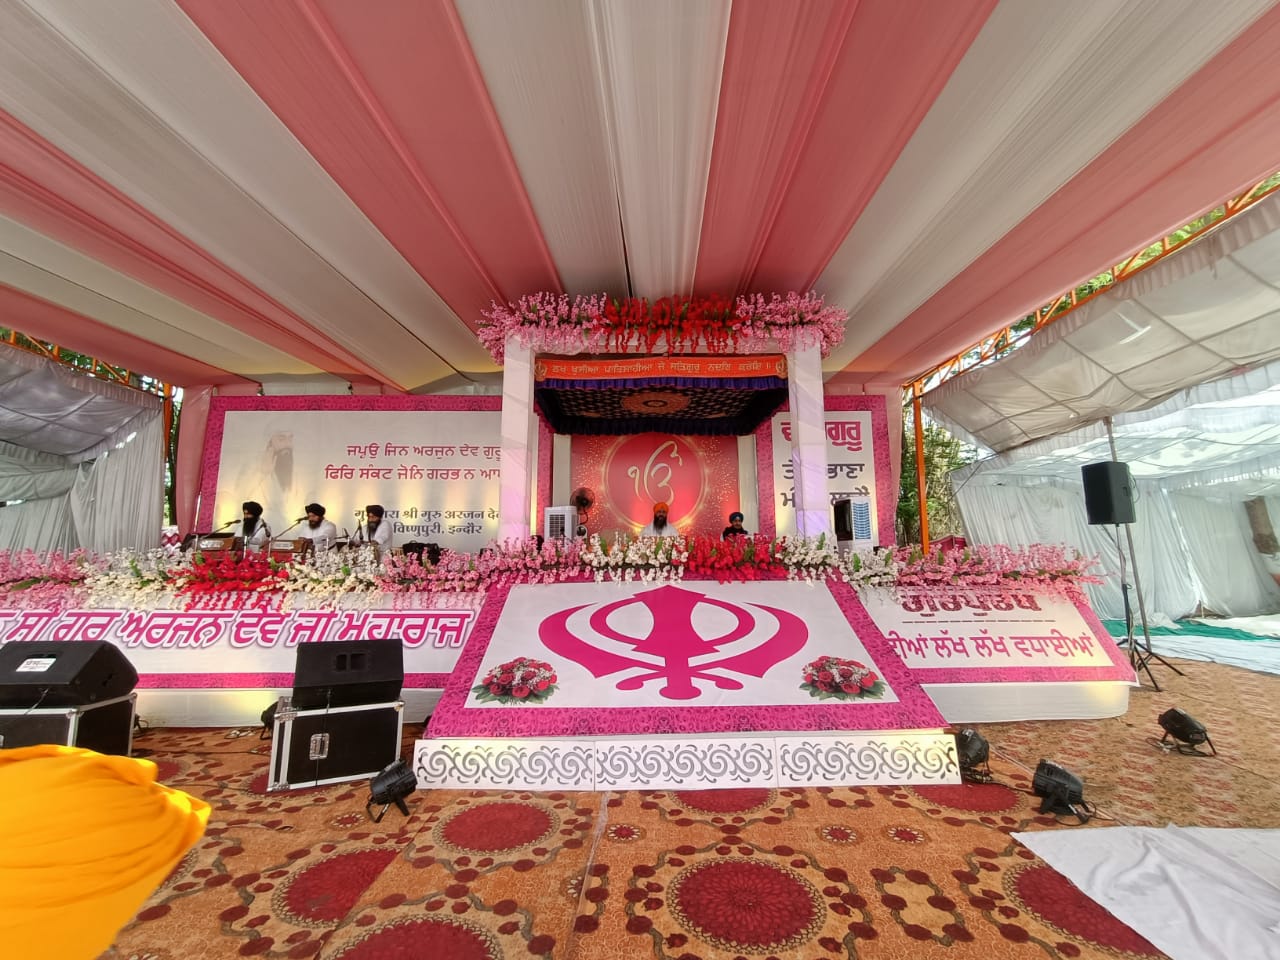 Today in Bilaspur: दयालबंद गुरुद्वारा में सजेगा दीवान, पर्युषण पर्व पर होगी  विशेष पूजा - Today in Bilaspur Diwan will be decorated in Dayalband  Gurdwara special worship will be done on Paryushan